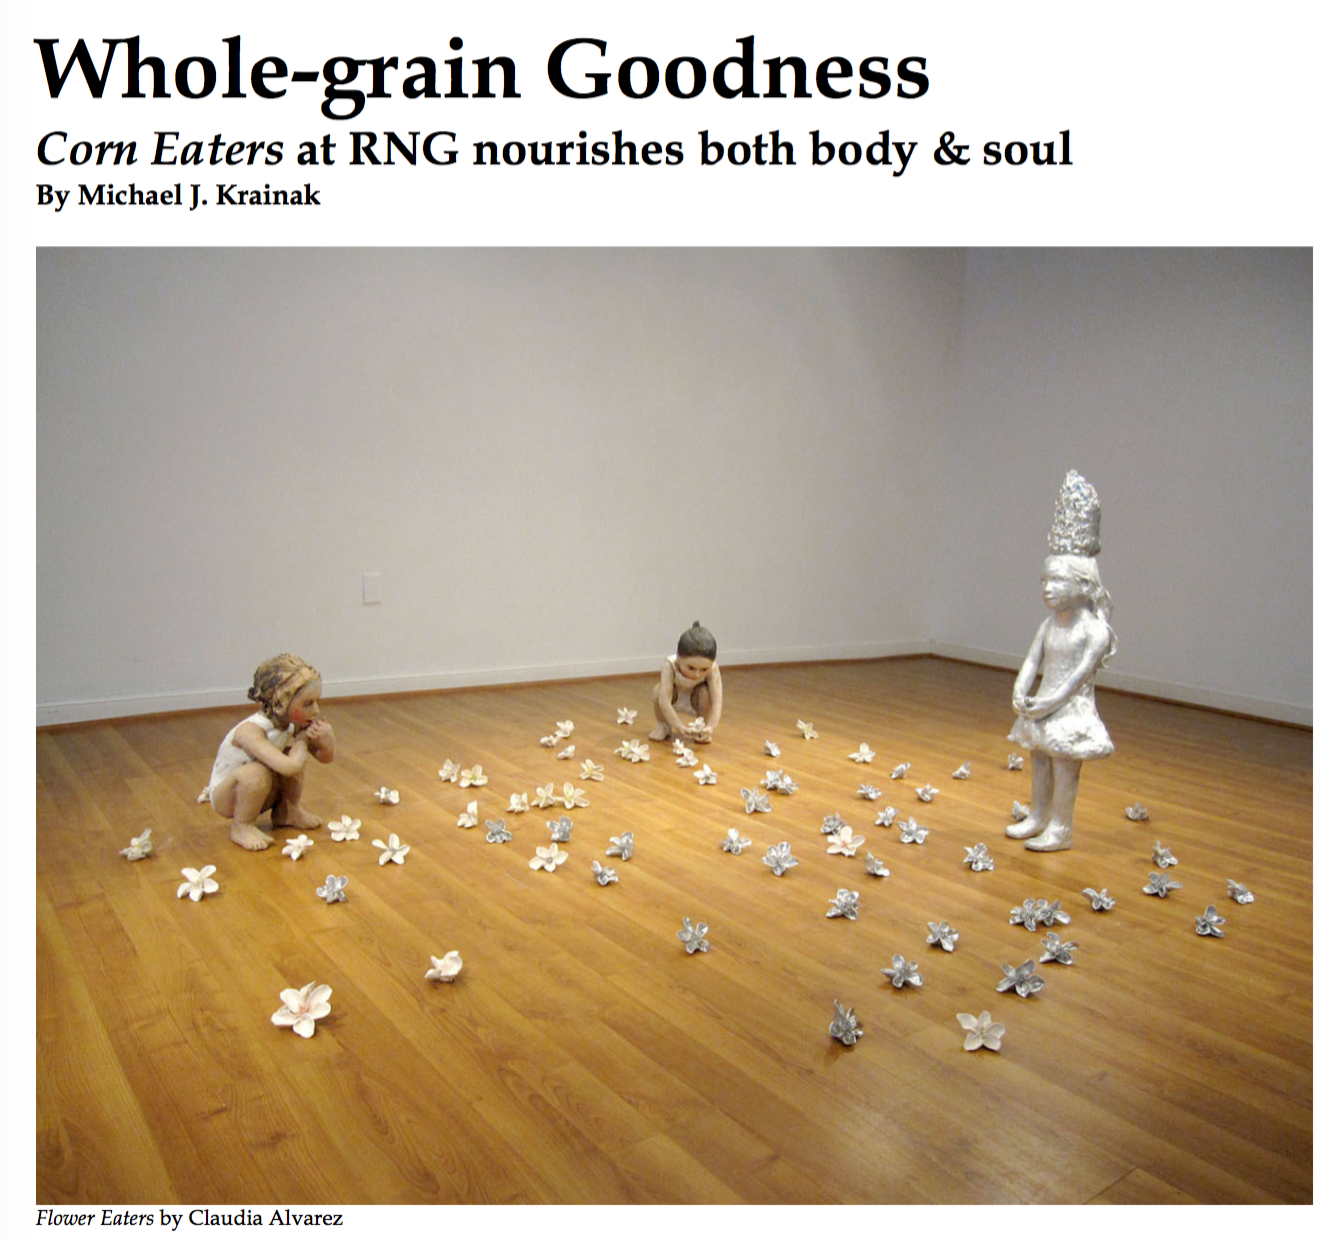 Whole-grain Goodness by Michael J. Krainak